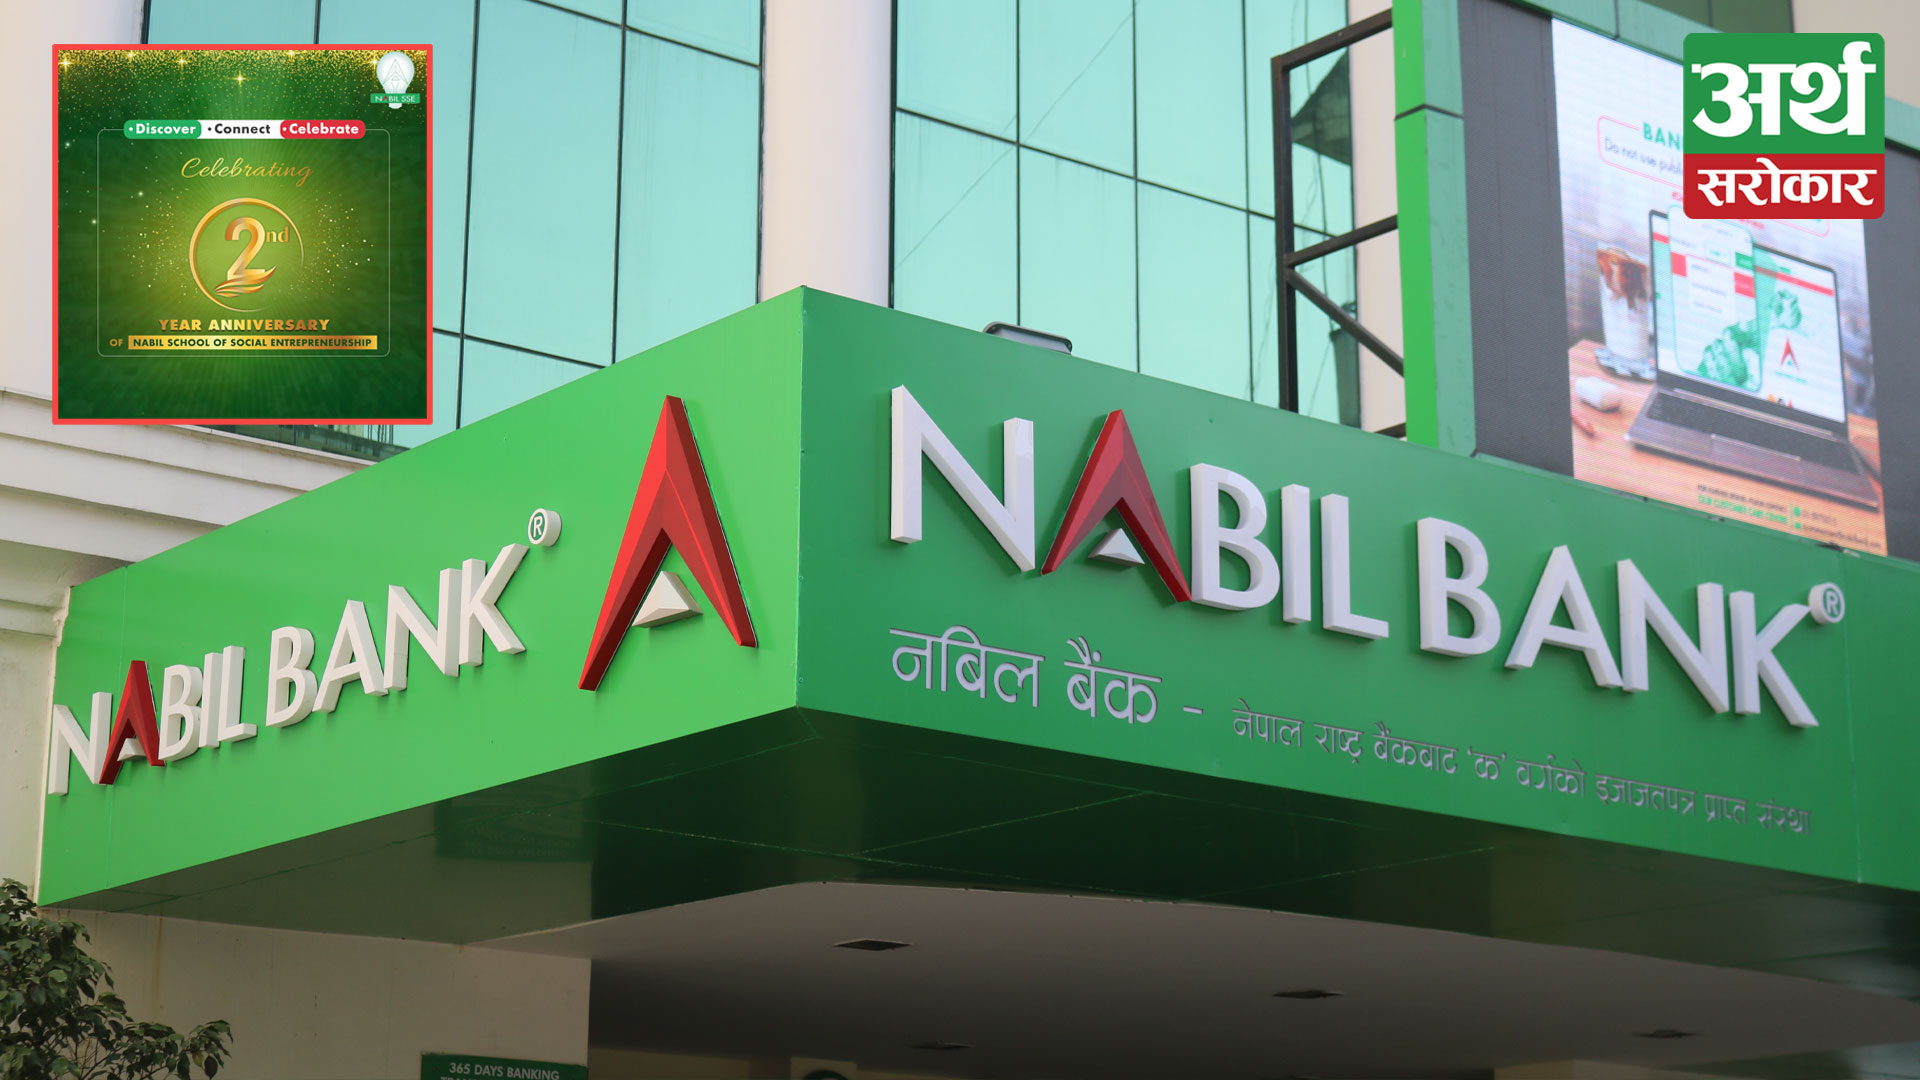 Nabil Bank celebrates the 2nd anniversary of the Nabil School of Social Entrepreneurship under CSR